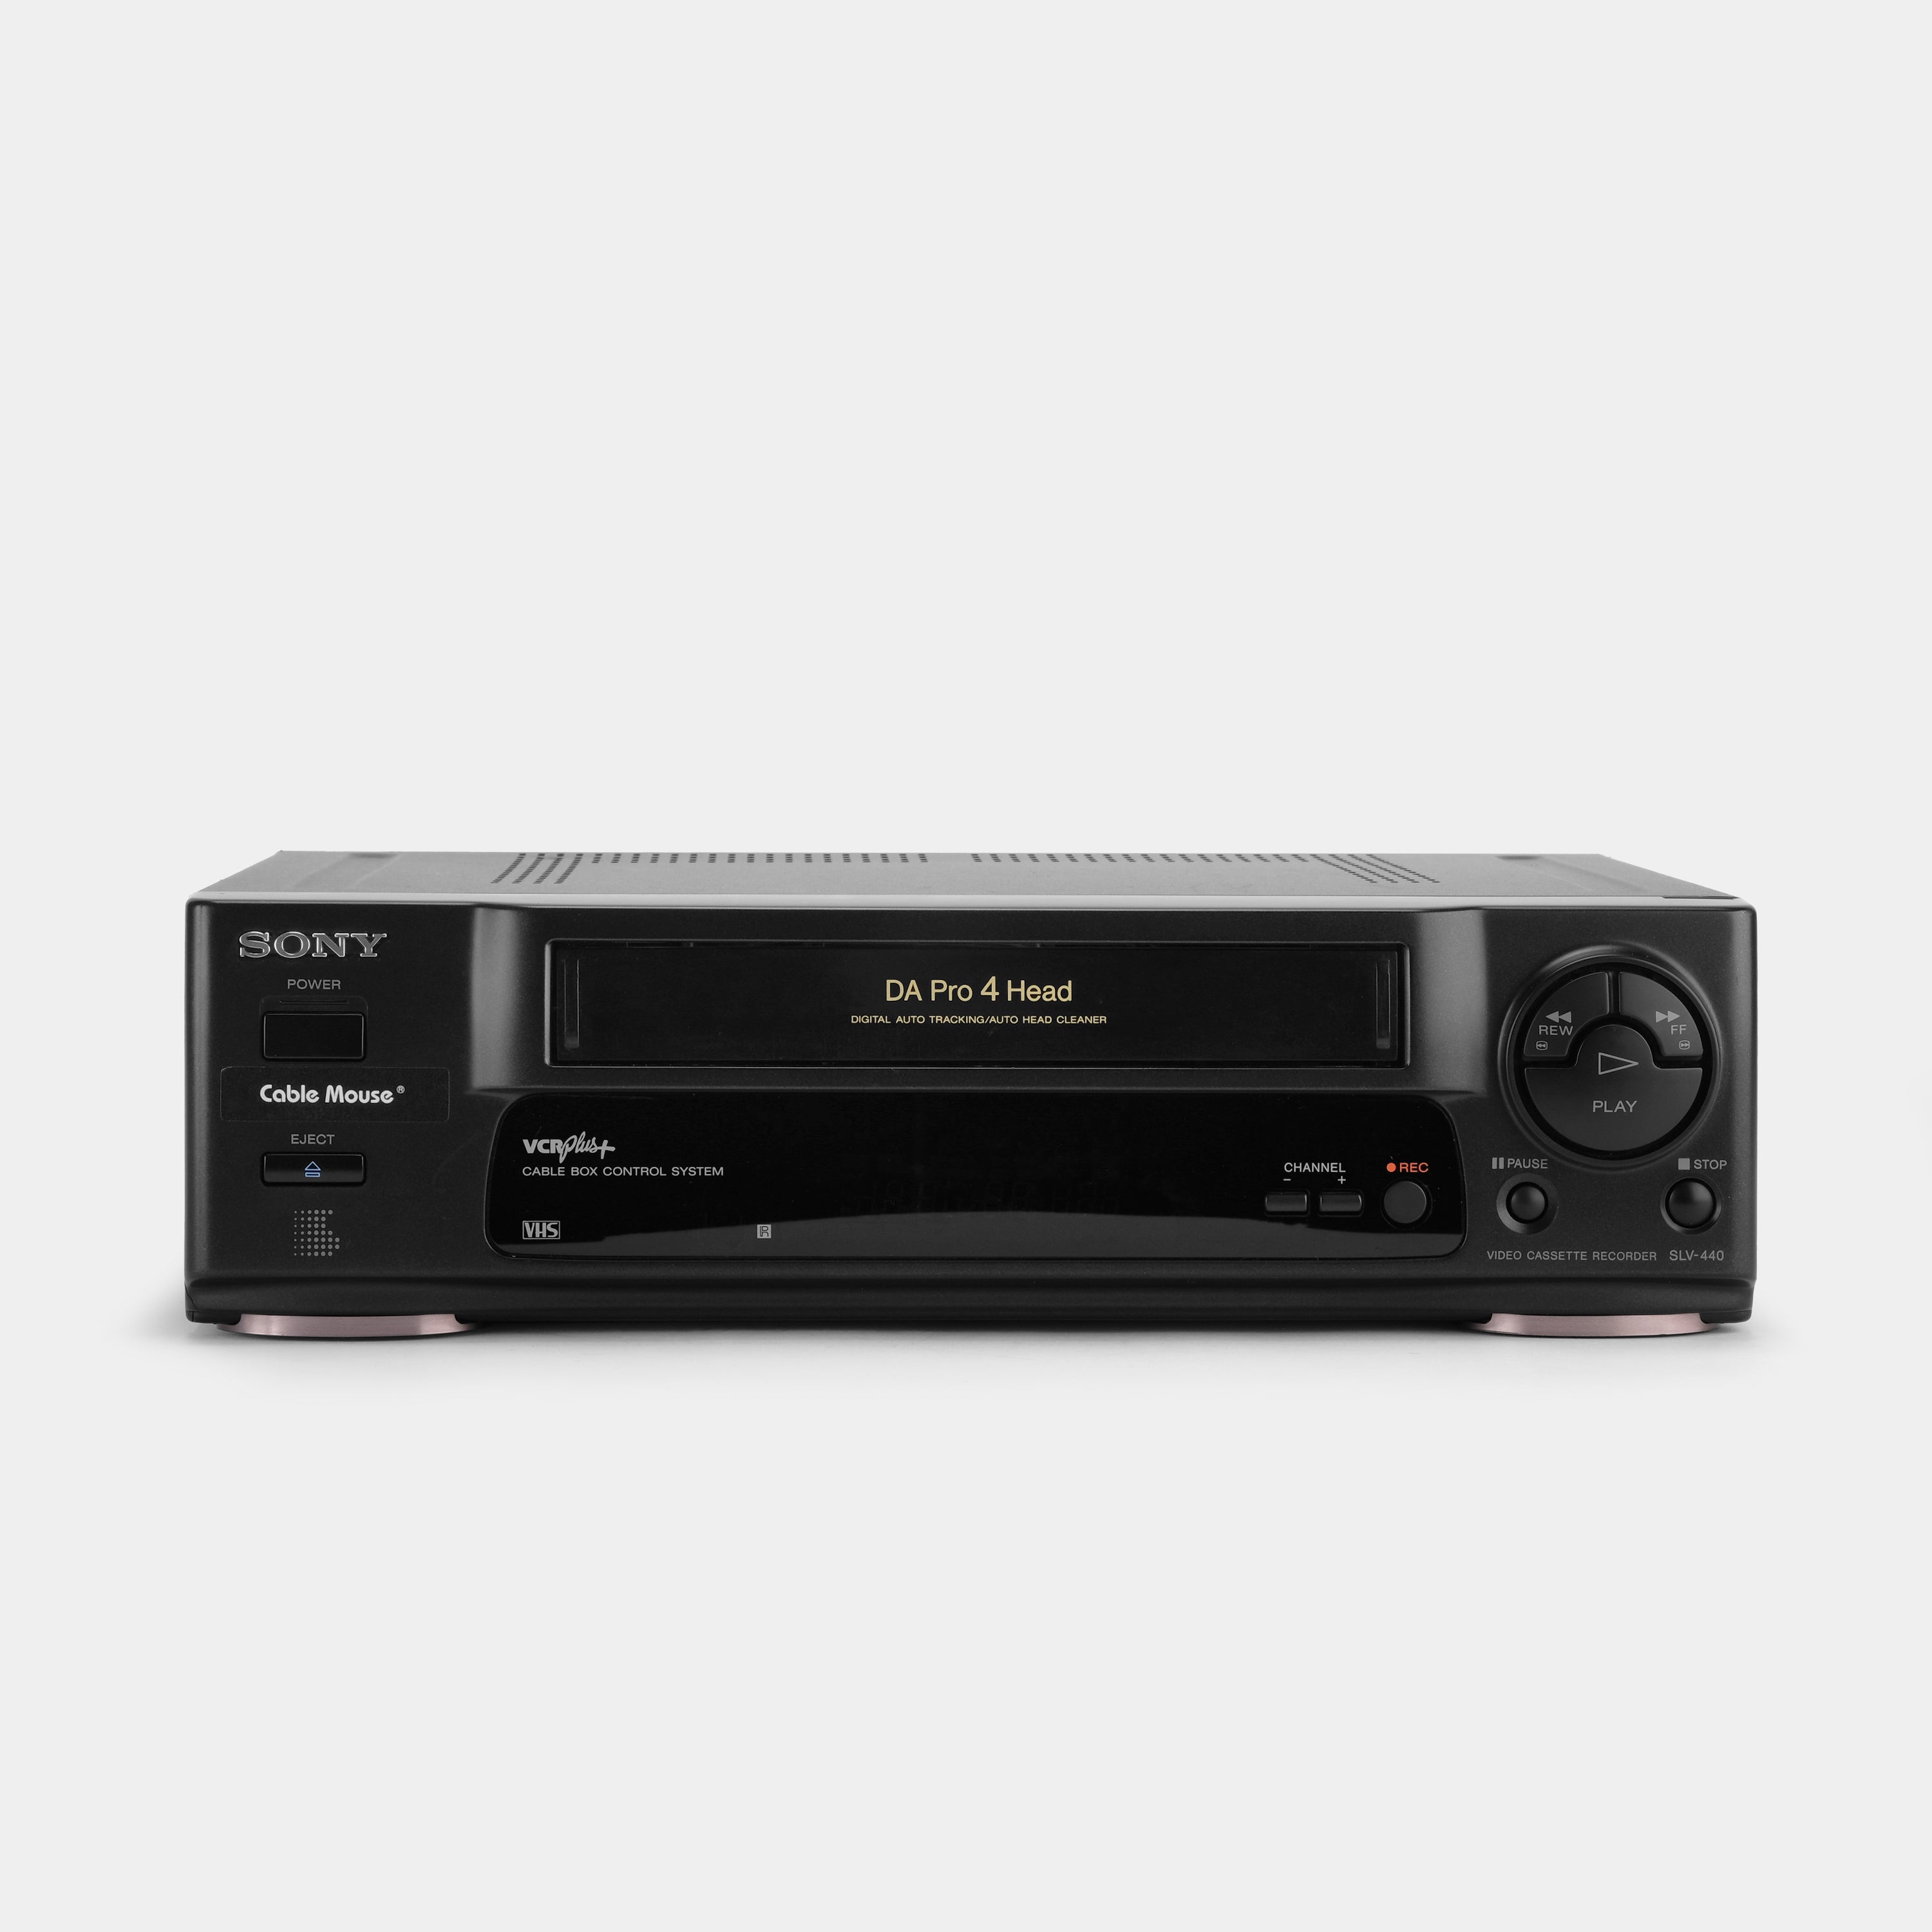 Sony SLV-440 VCR VHS Player